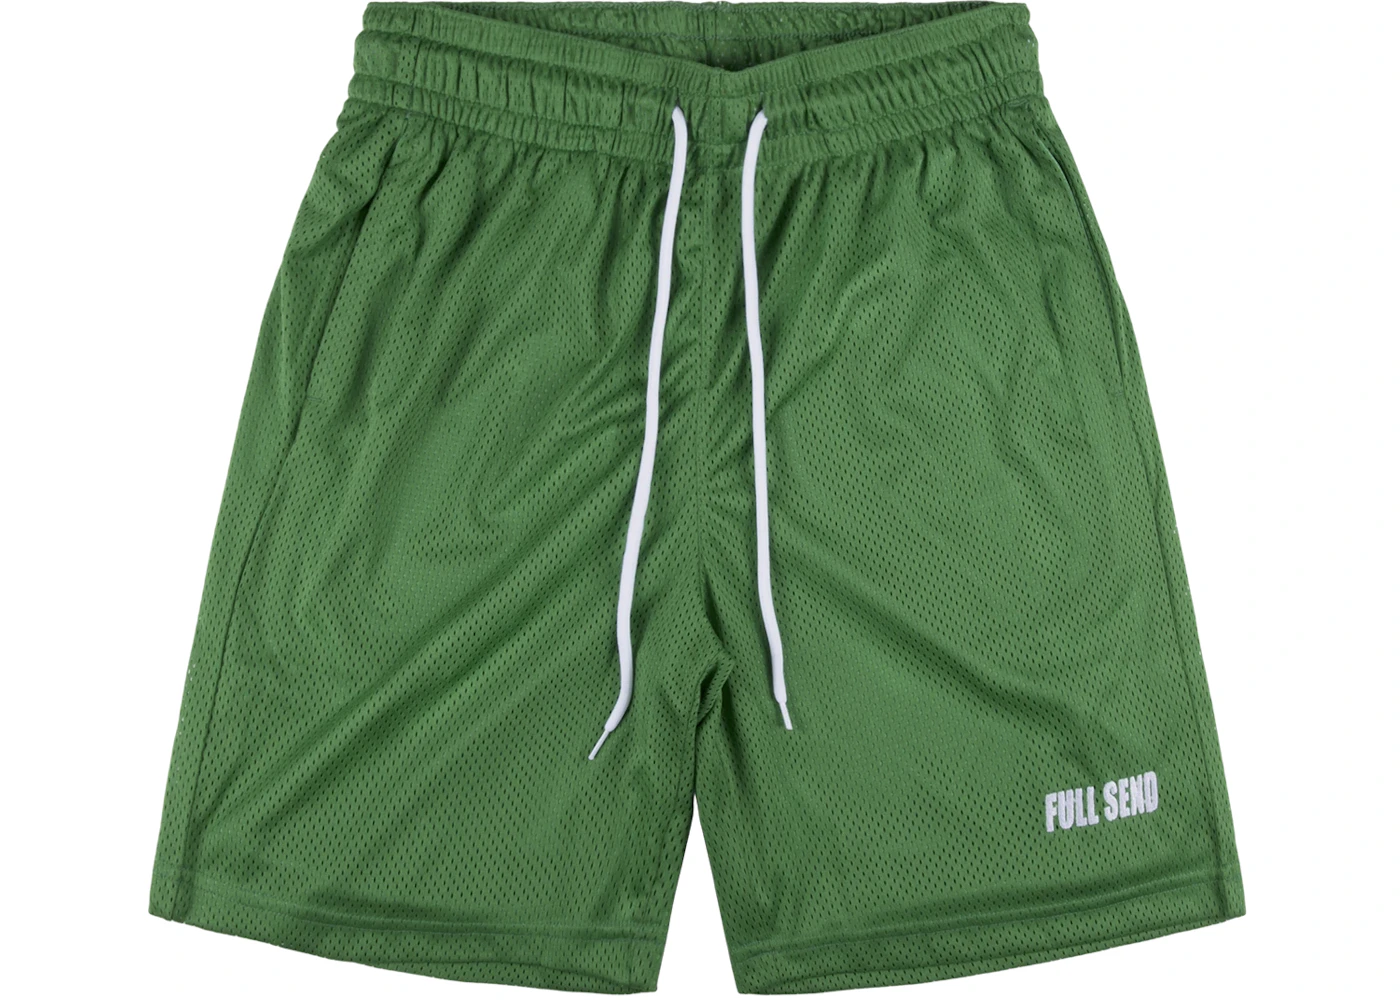 Full Send FS Sportswear Mesh Shorts Green Men's - SS21 - US